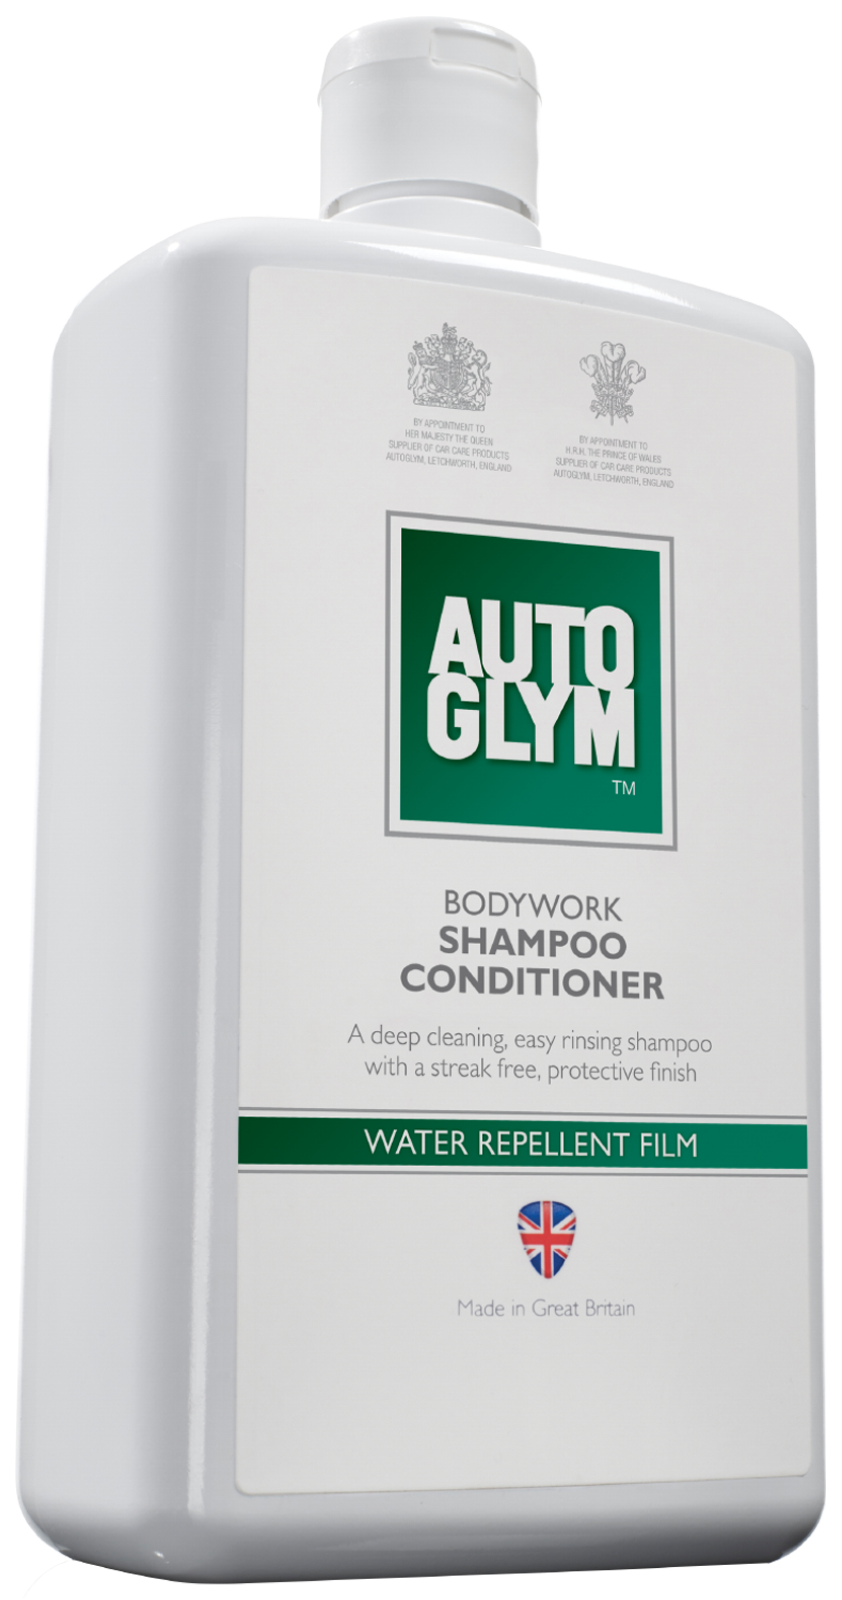 Auto Glym - Bodywork Shampoo Conditioner